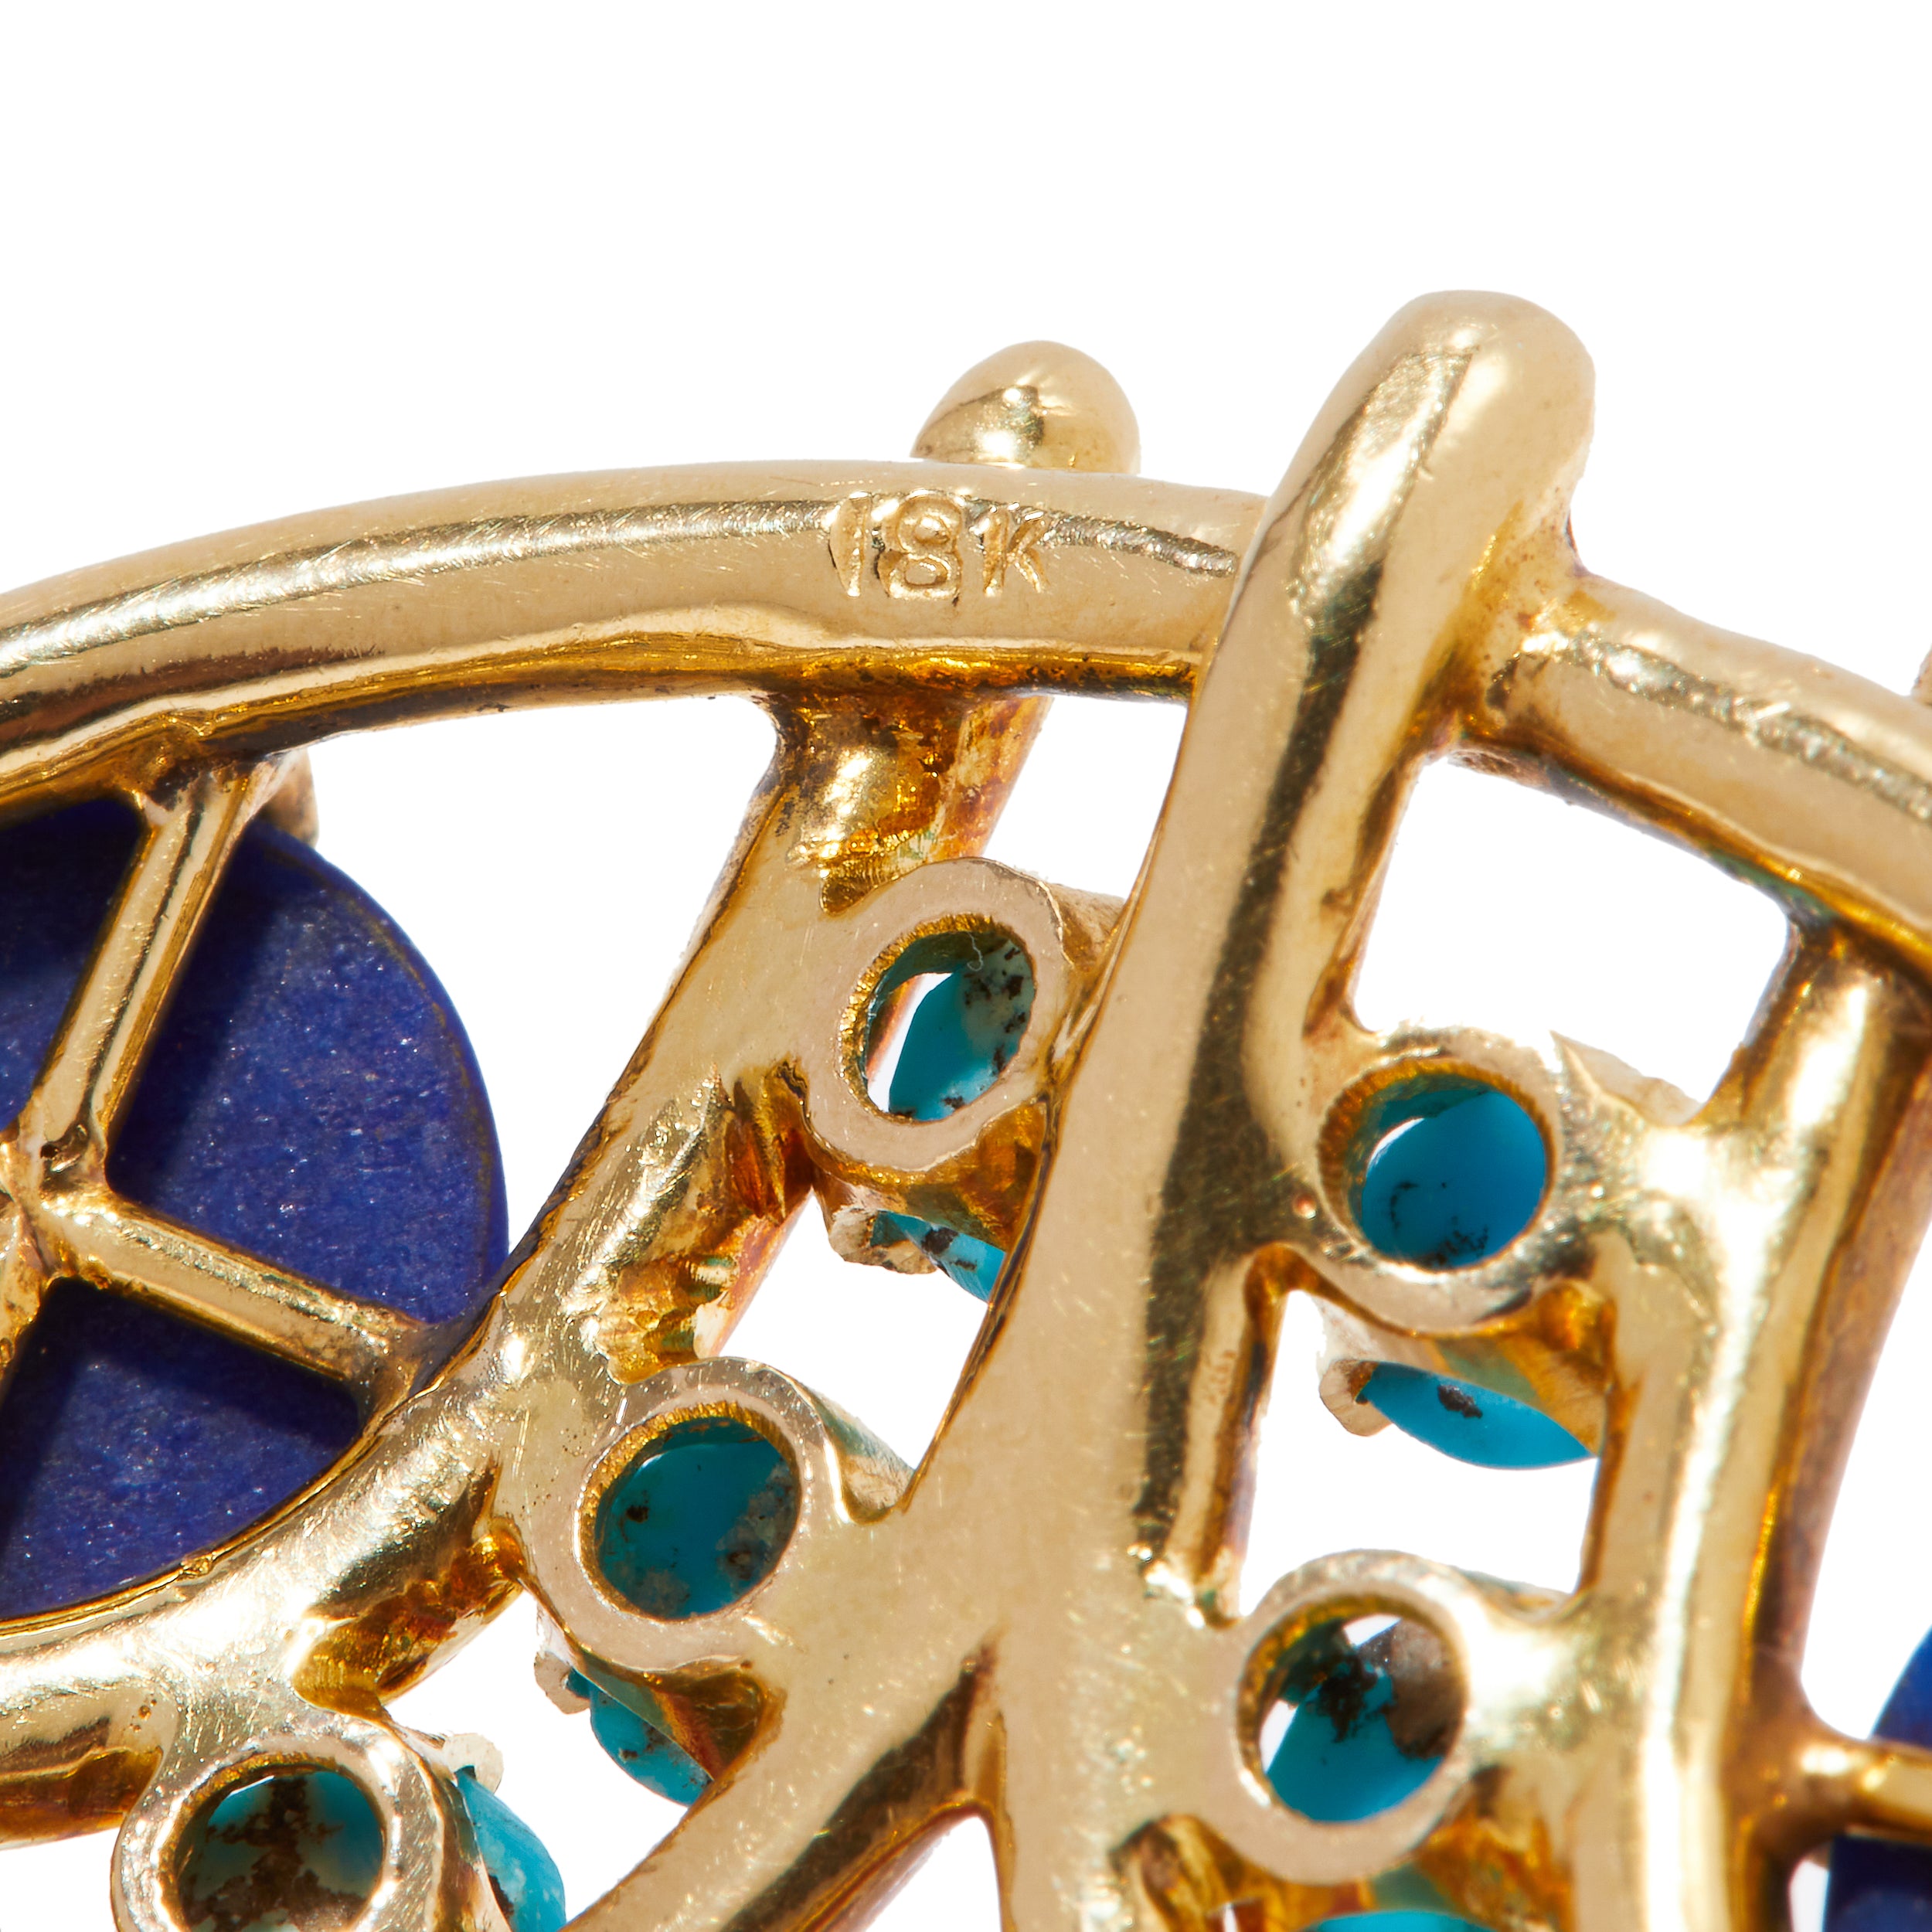 Hallmarks on 1980s-1990s Saks Fifth Avenue gold medallion necklace.